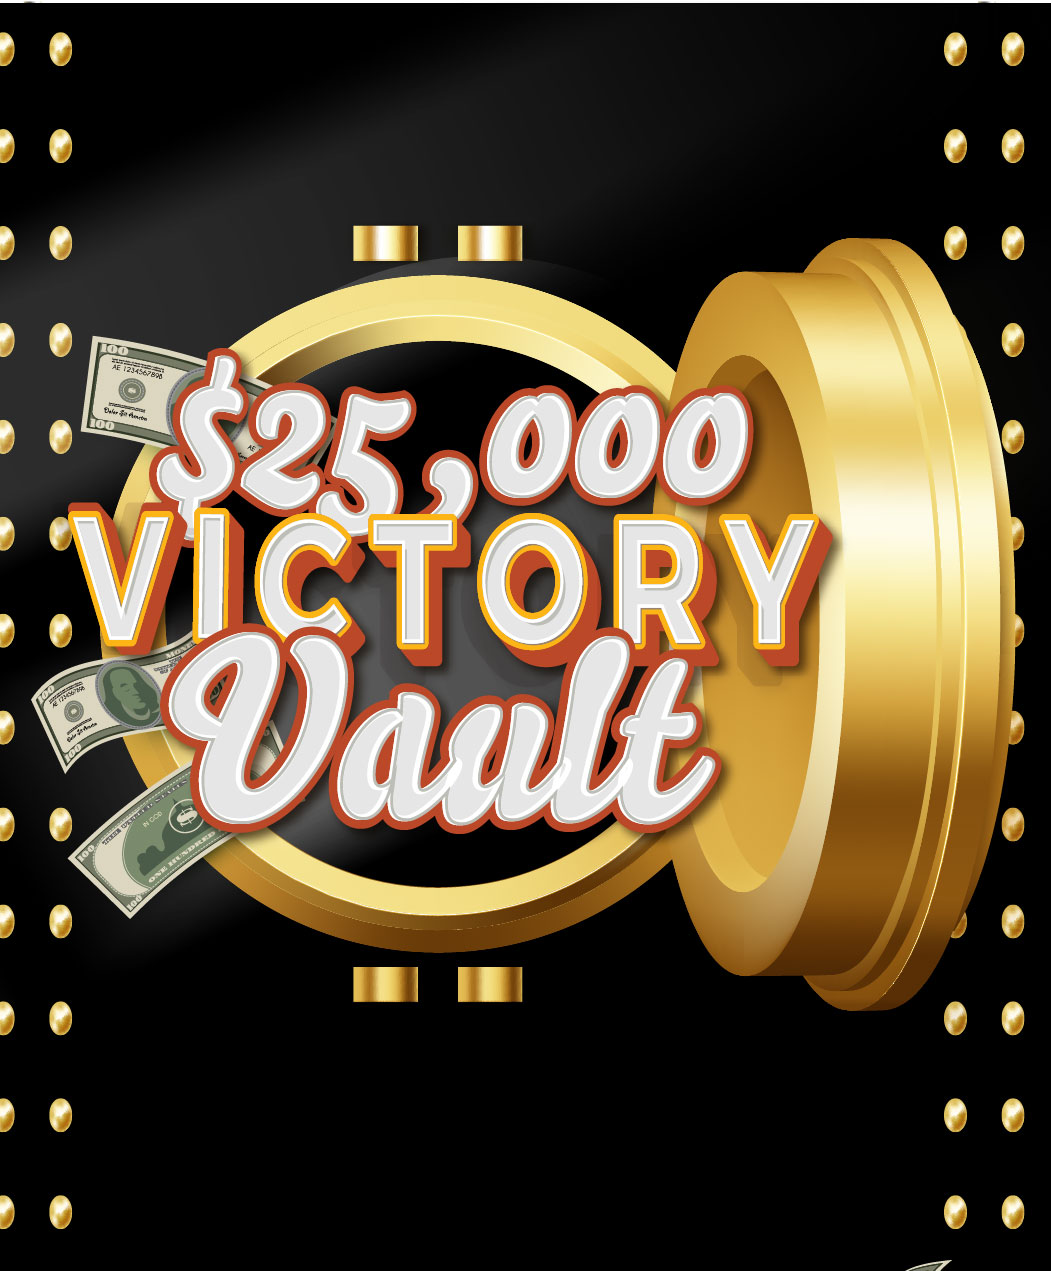 25K Victory Vault